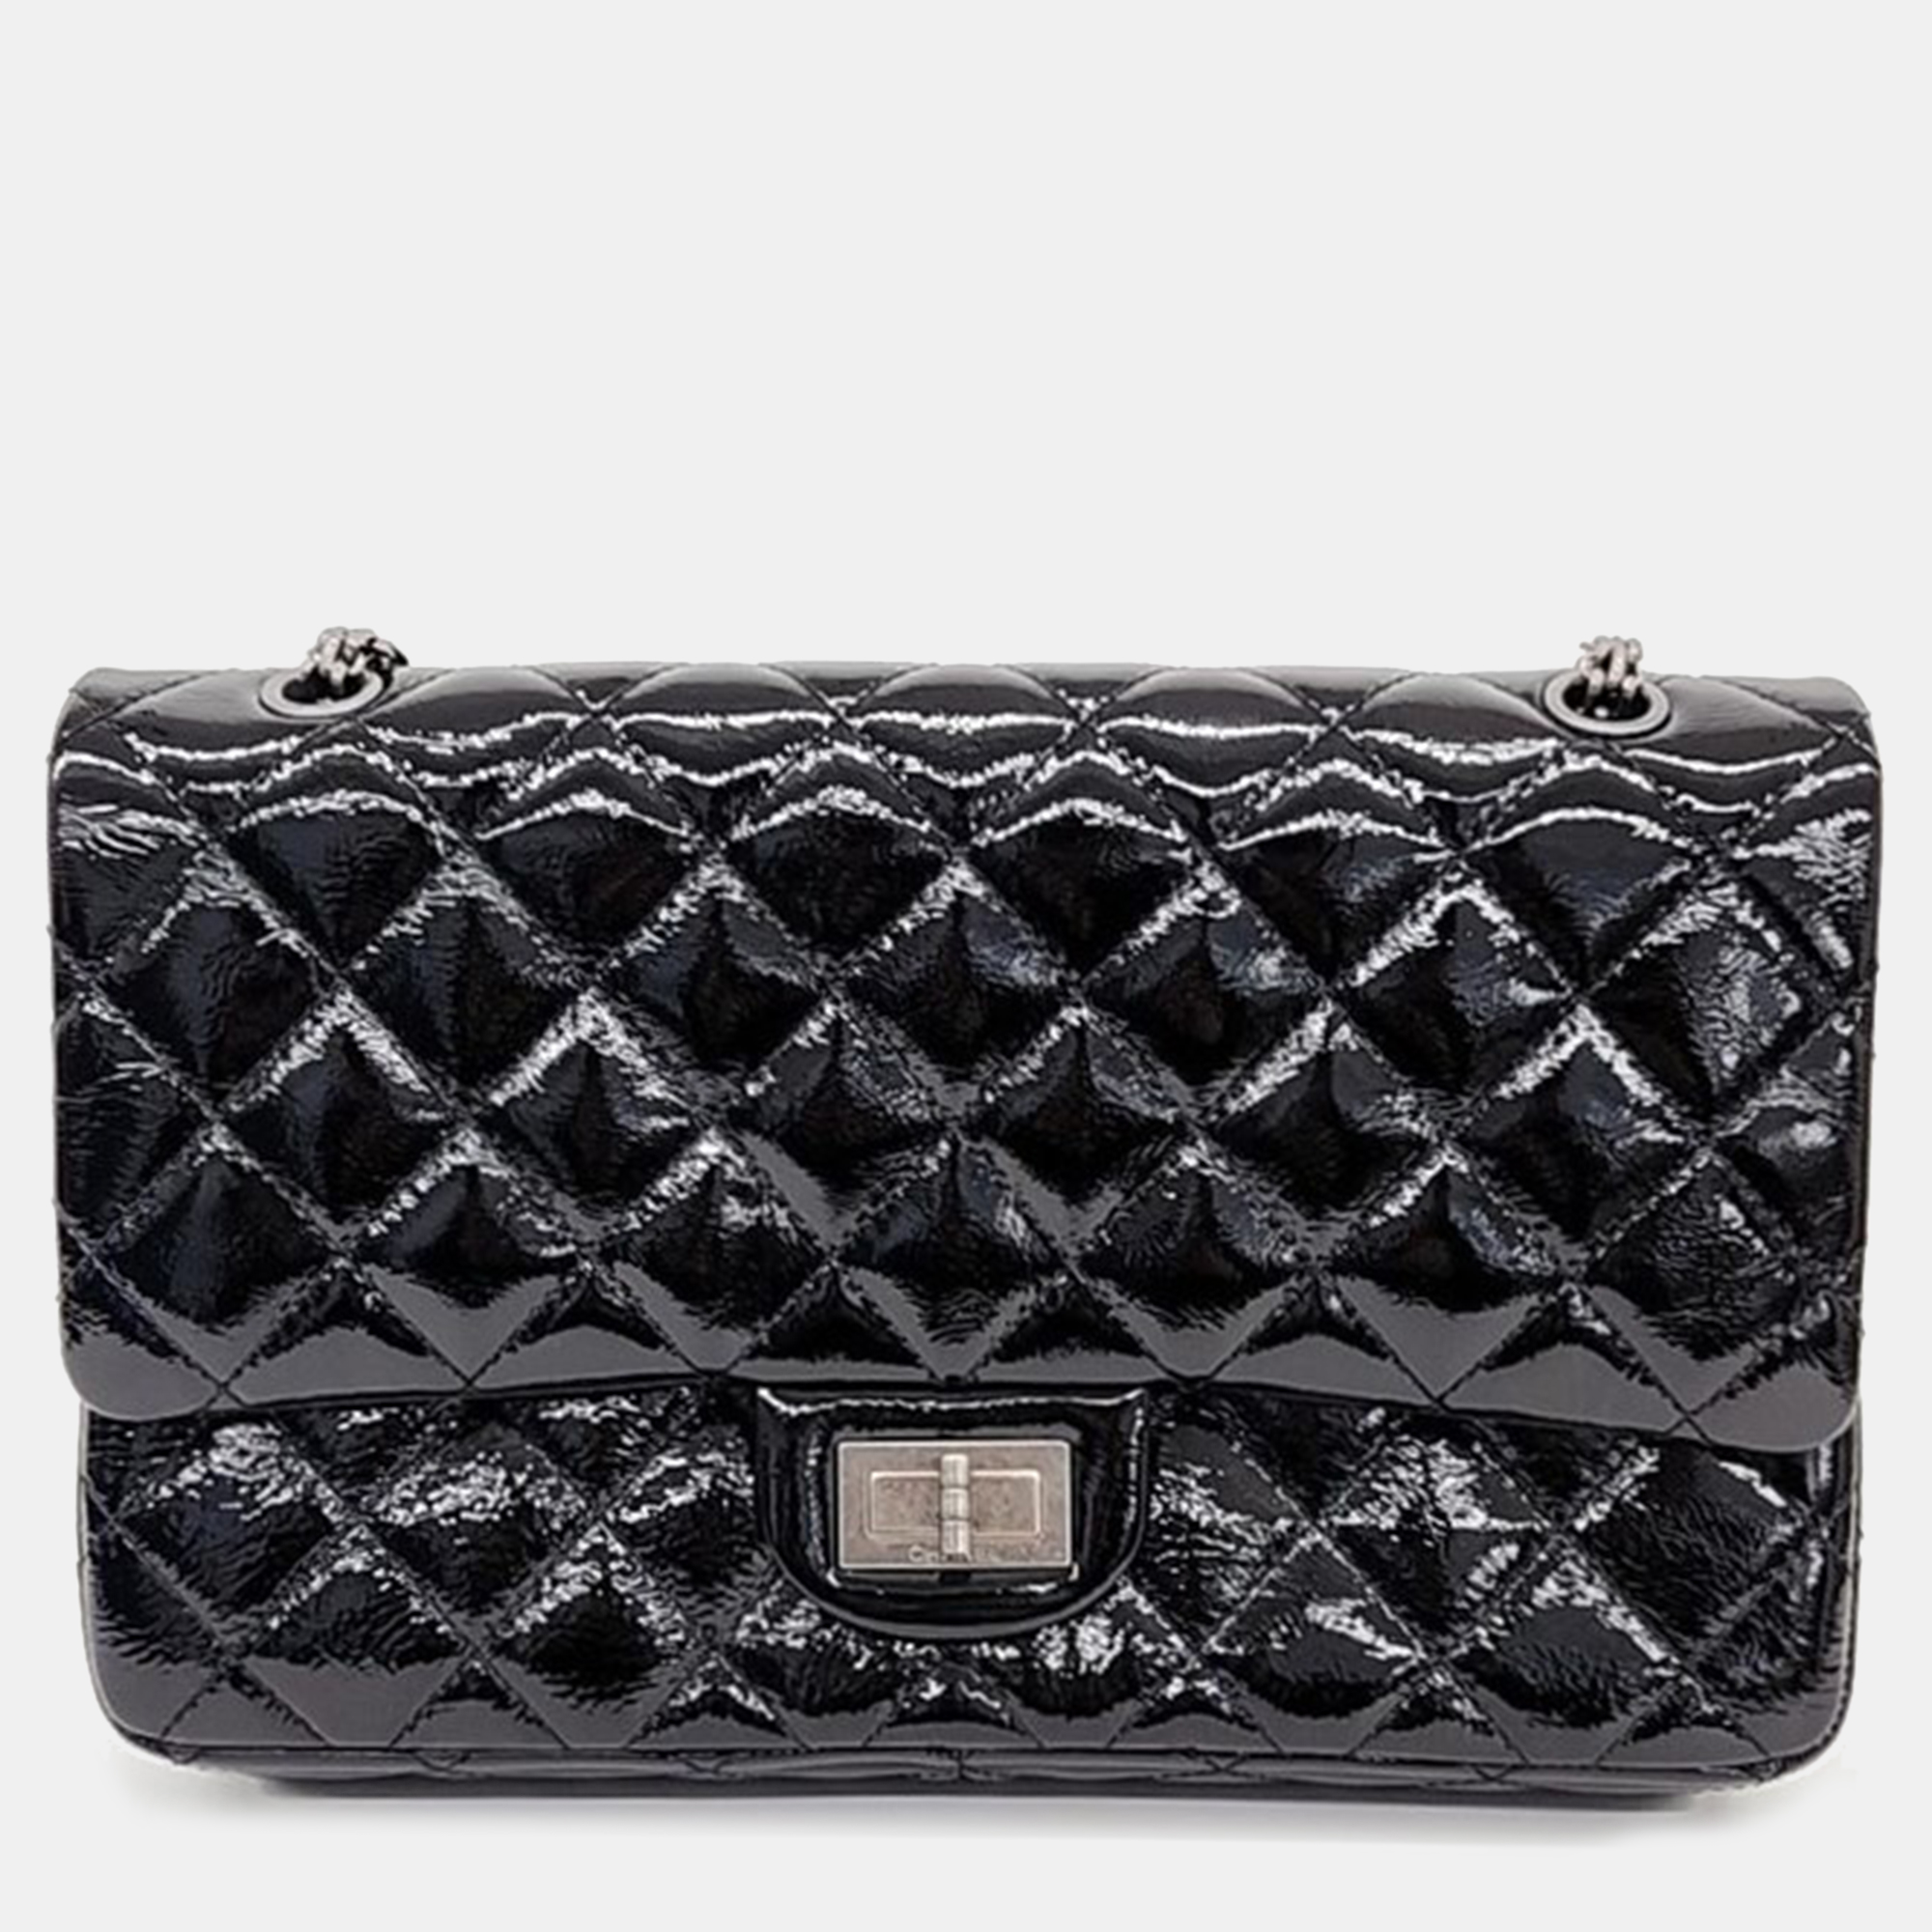 Chanel black patent leather vintage 2.55 flap bag